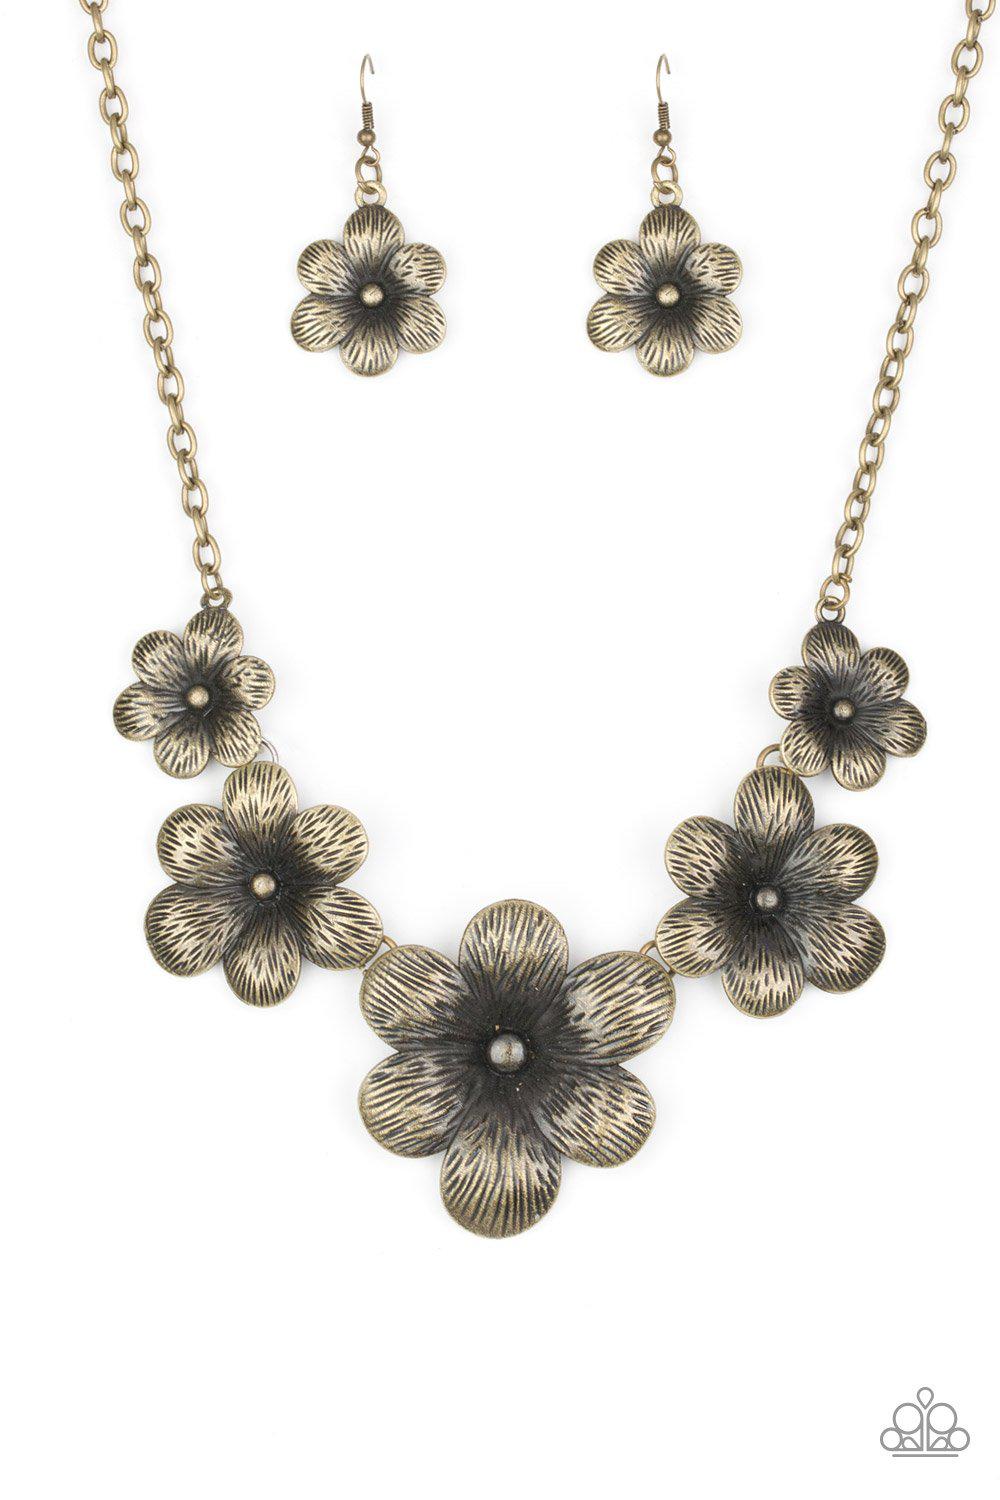 Secret Garden Brass Flower Necklace - Paparazzi Accessories - lightbox -CarasShop.com - $5 Jewelry by Cara Jewels